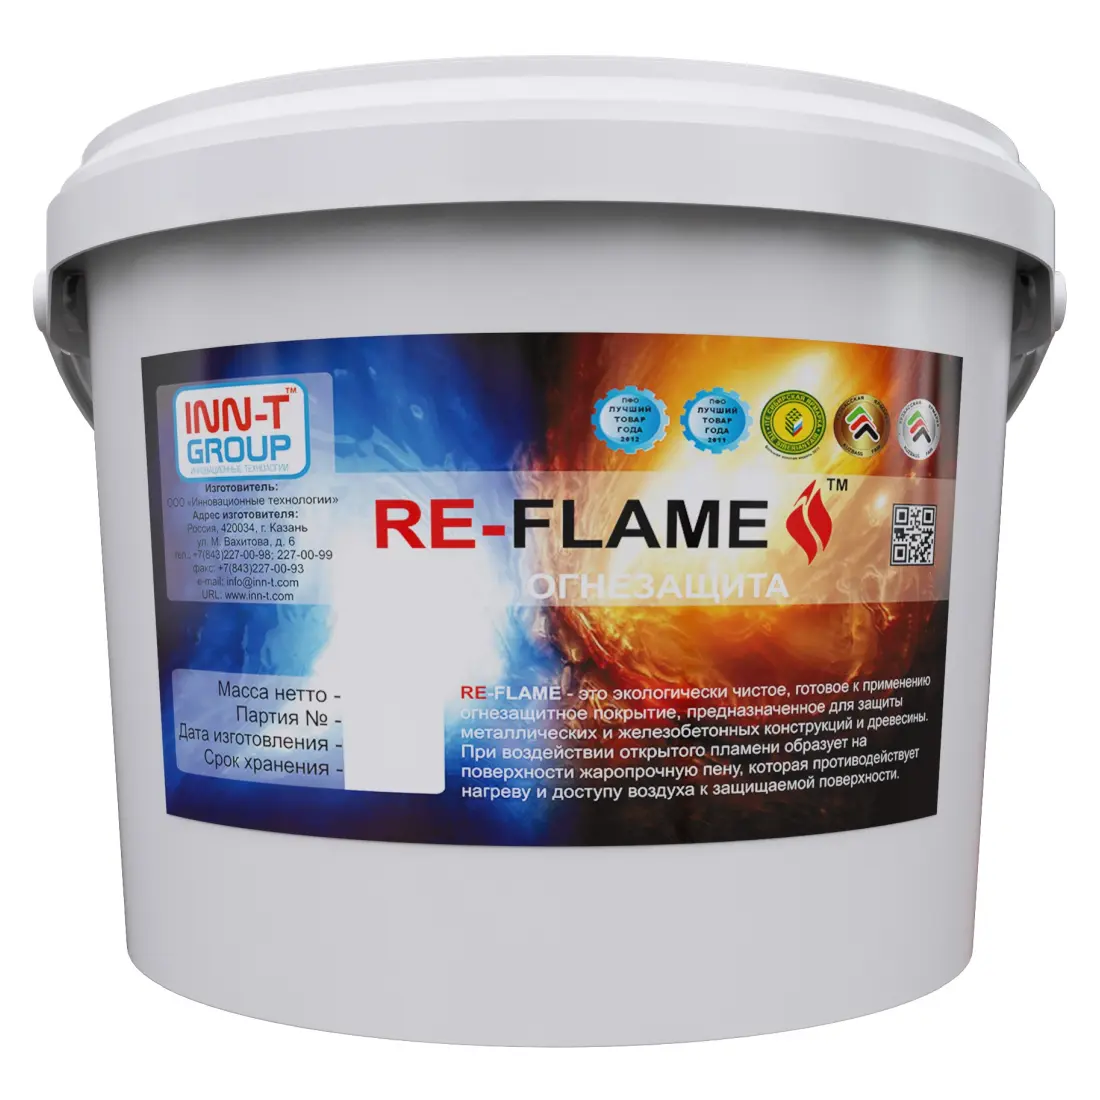 Огнезащита RE-FLAME огнезащита конструкций огнезащита металлических огнезащита металлоконструкций